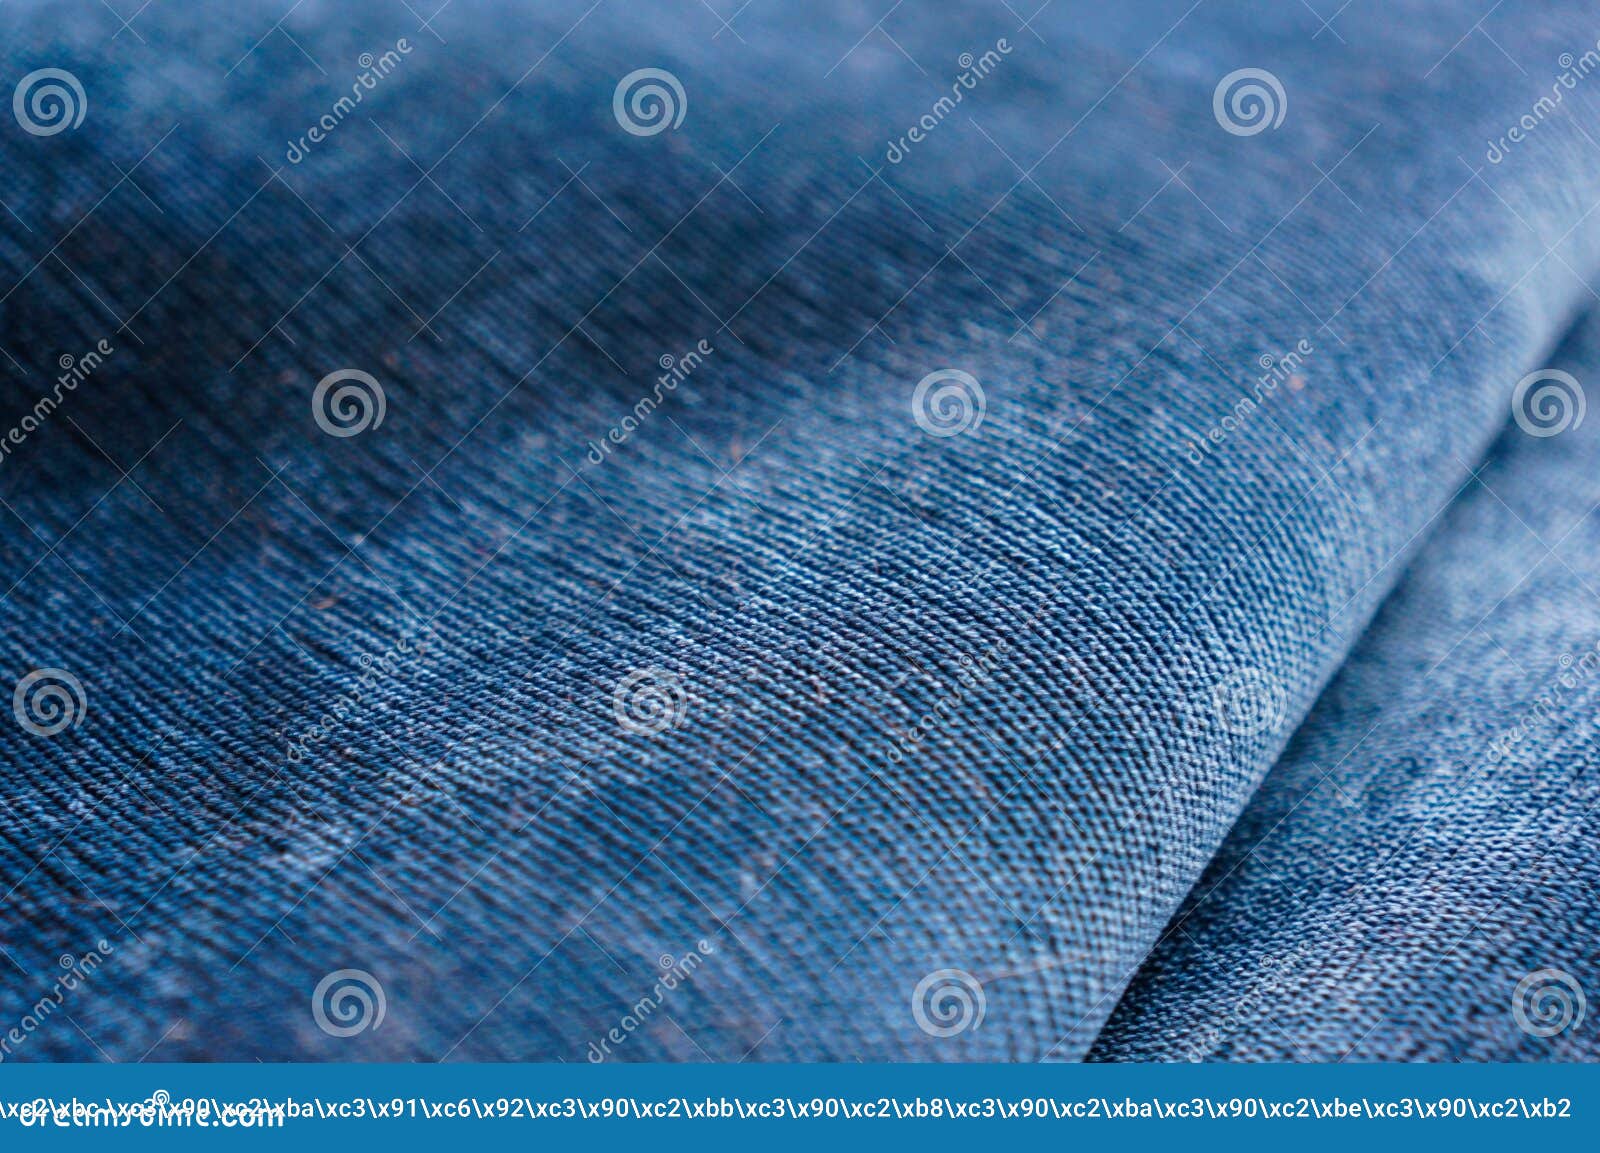 Soft fabric texture stock image. Image of indigo, textured - 177732245